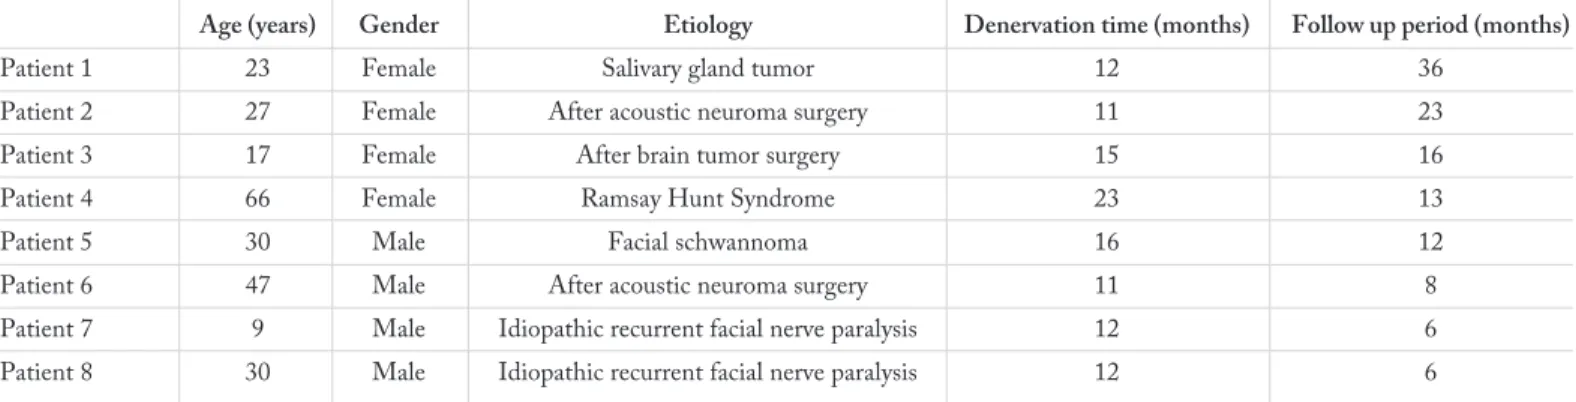 Table 1. Patient data